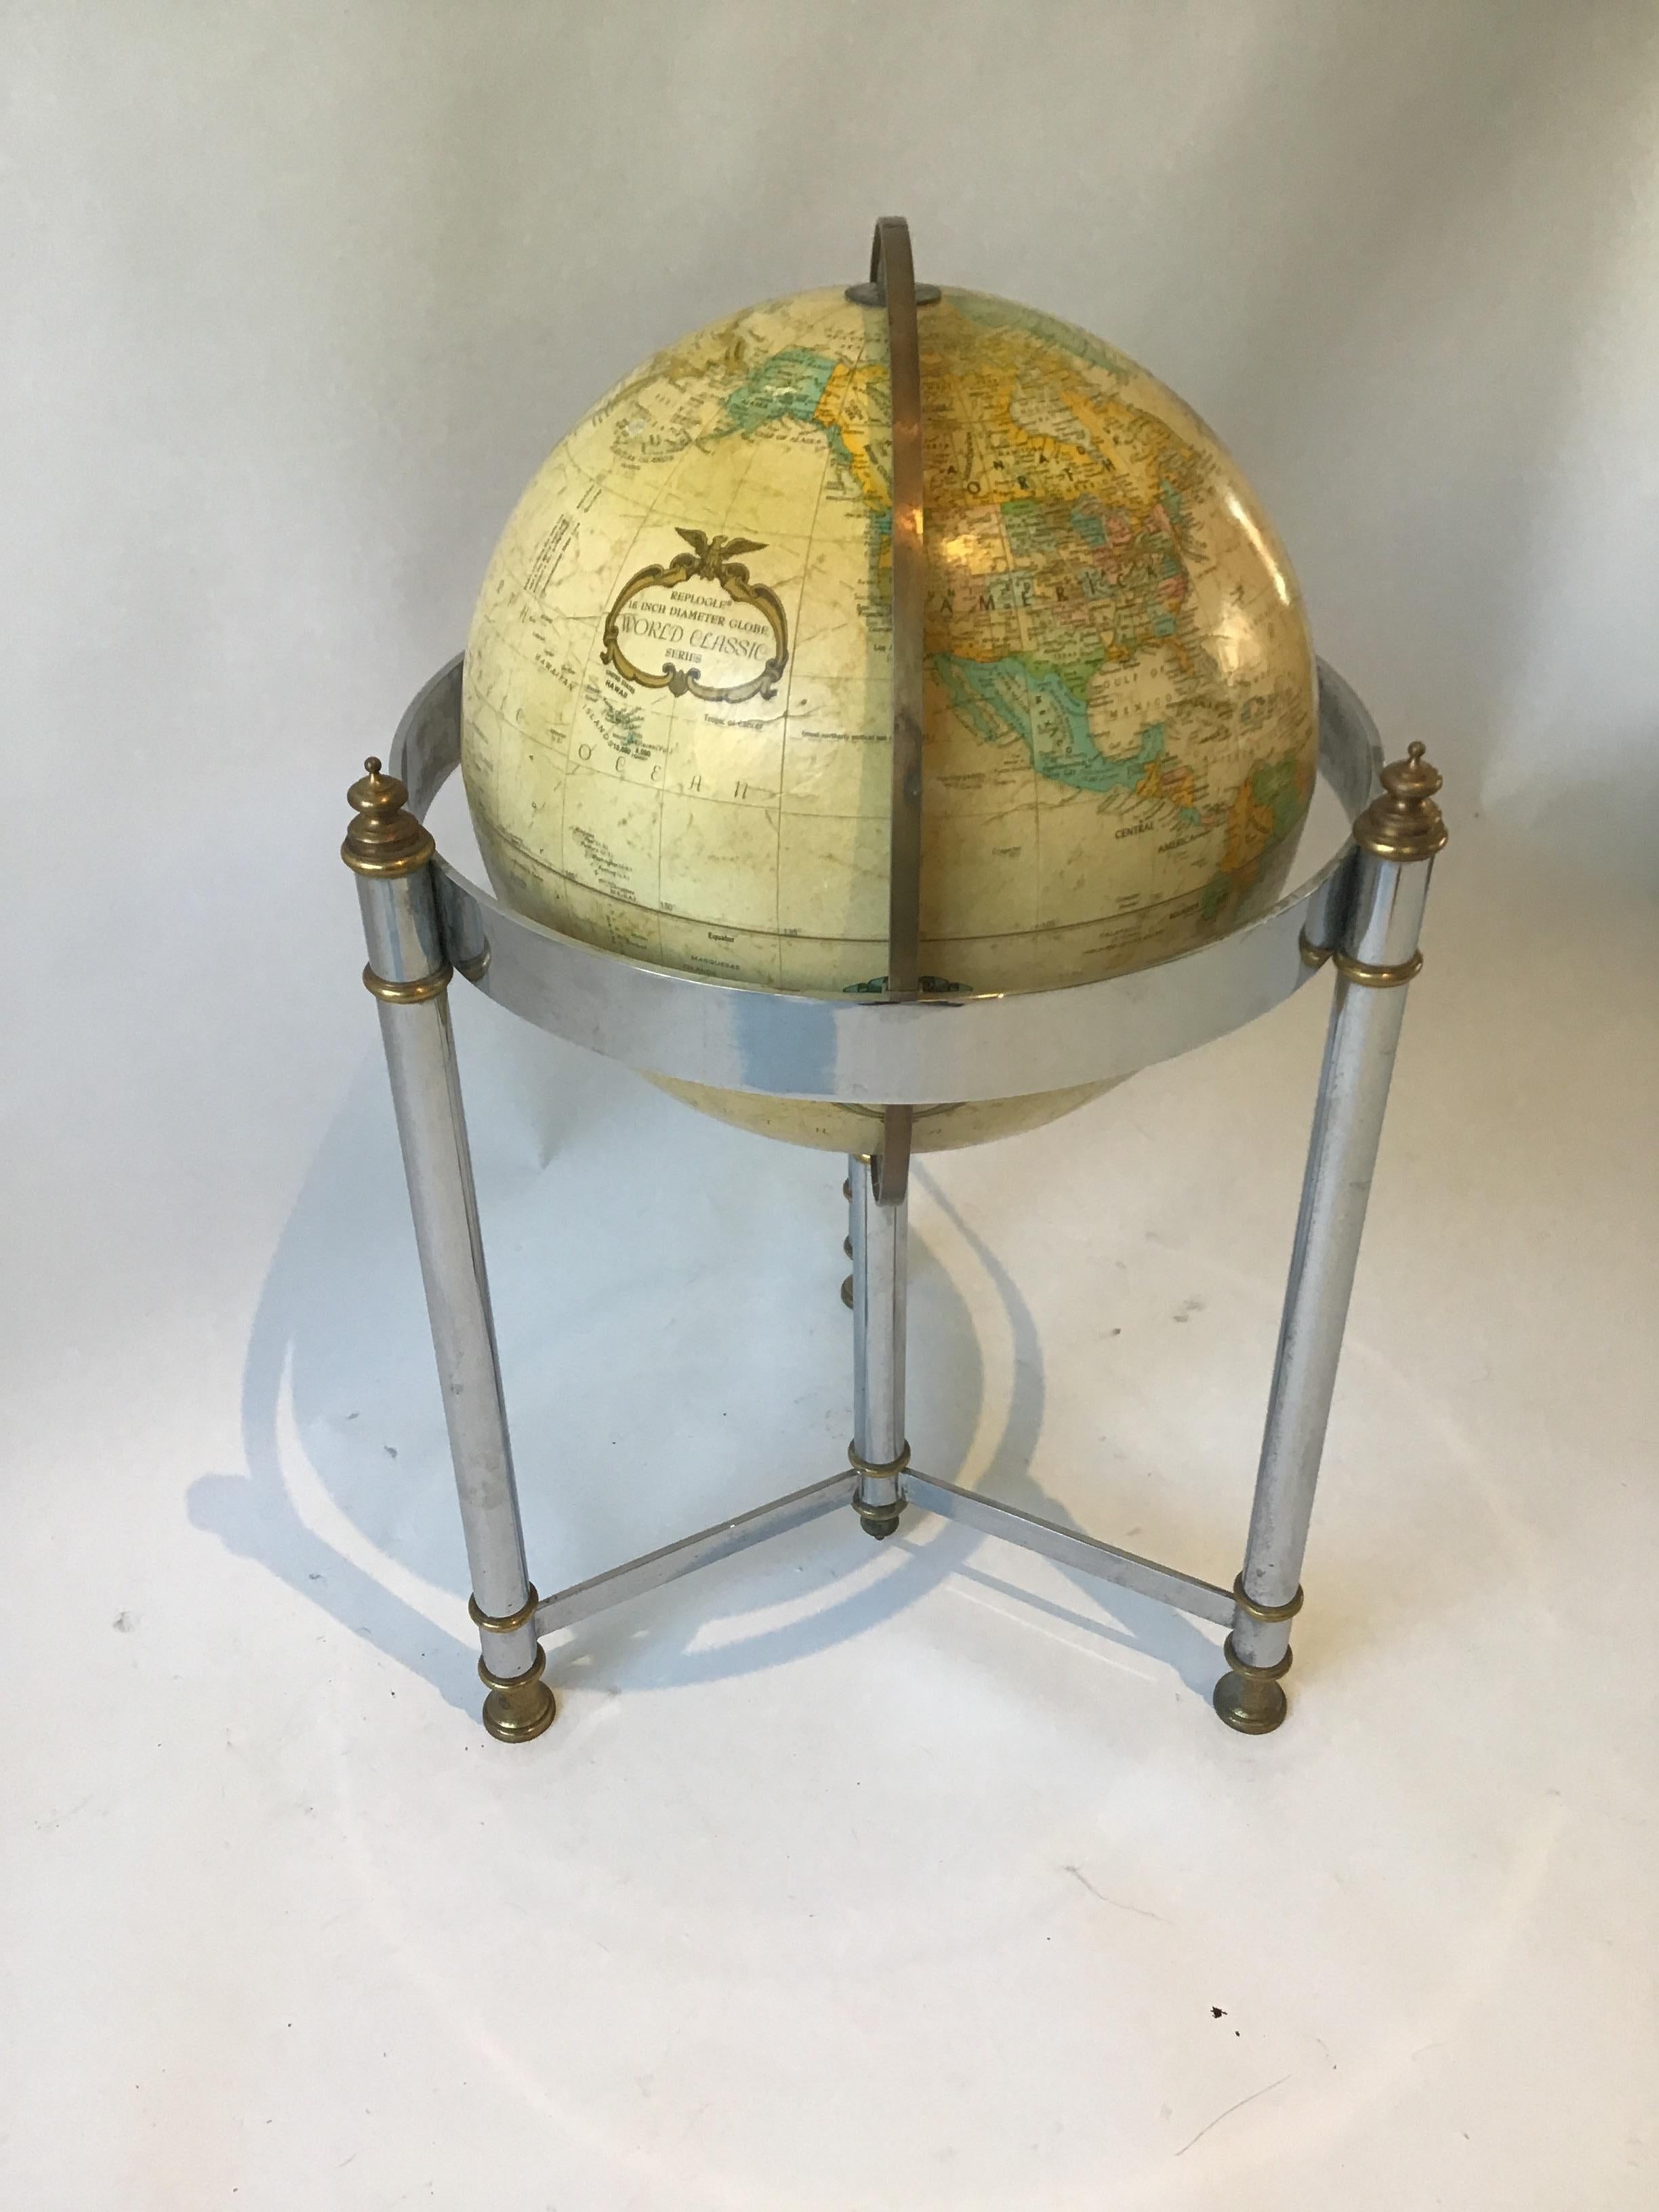 1970s globe